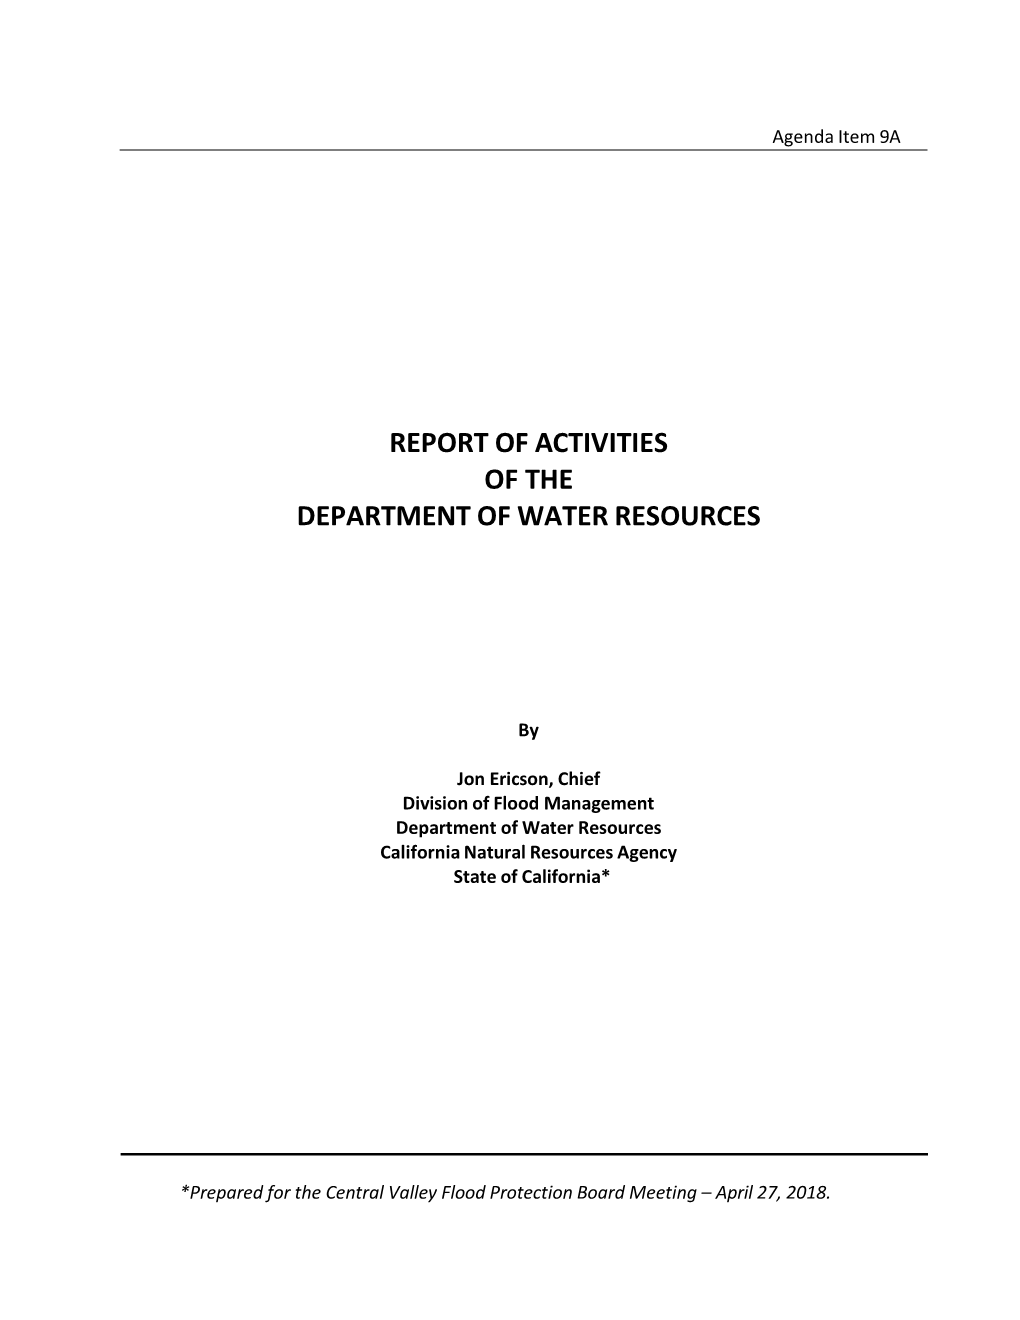 Report of Activities of the Department of Water Resources